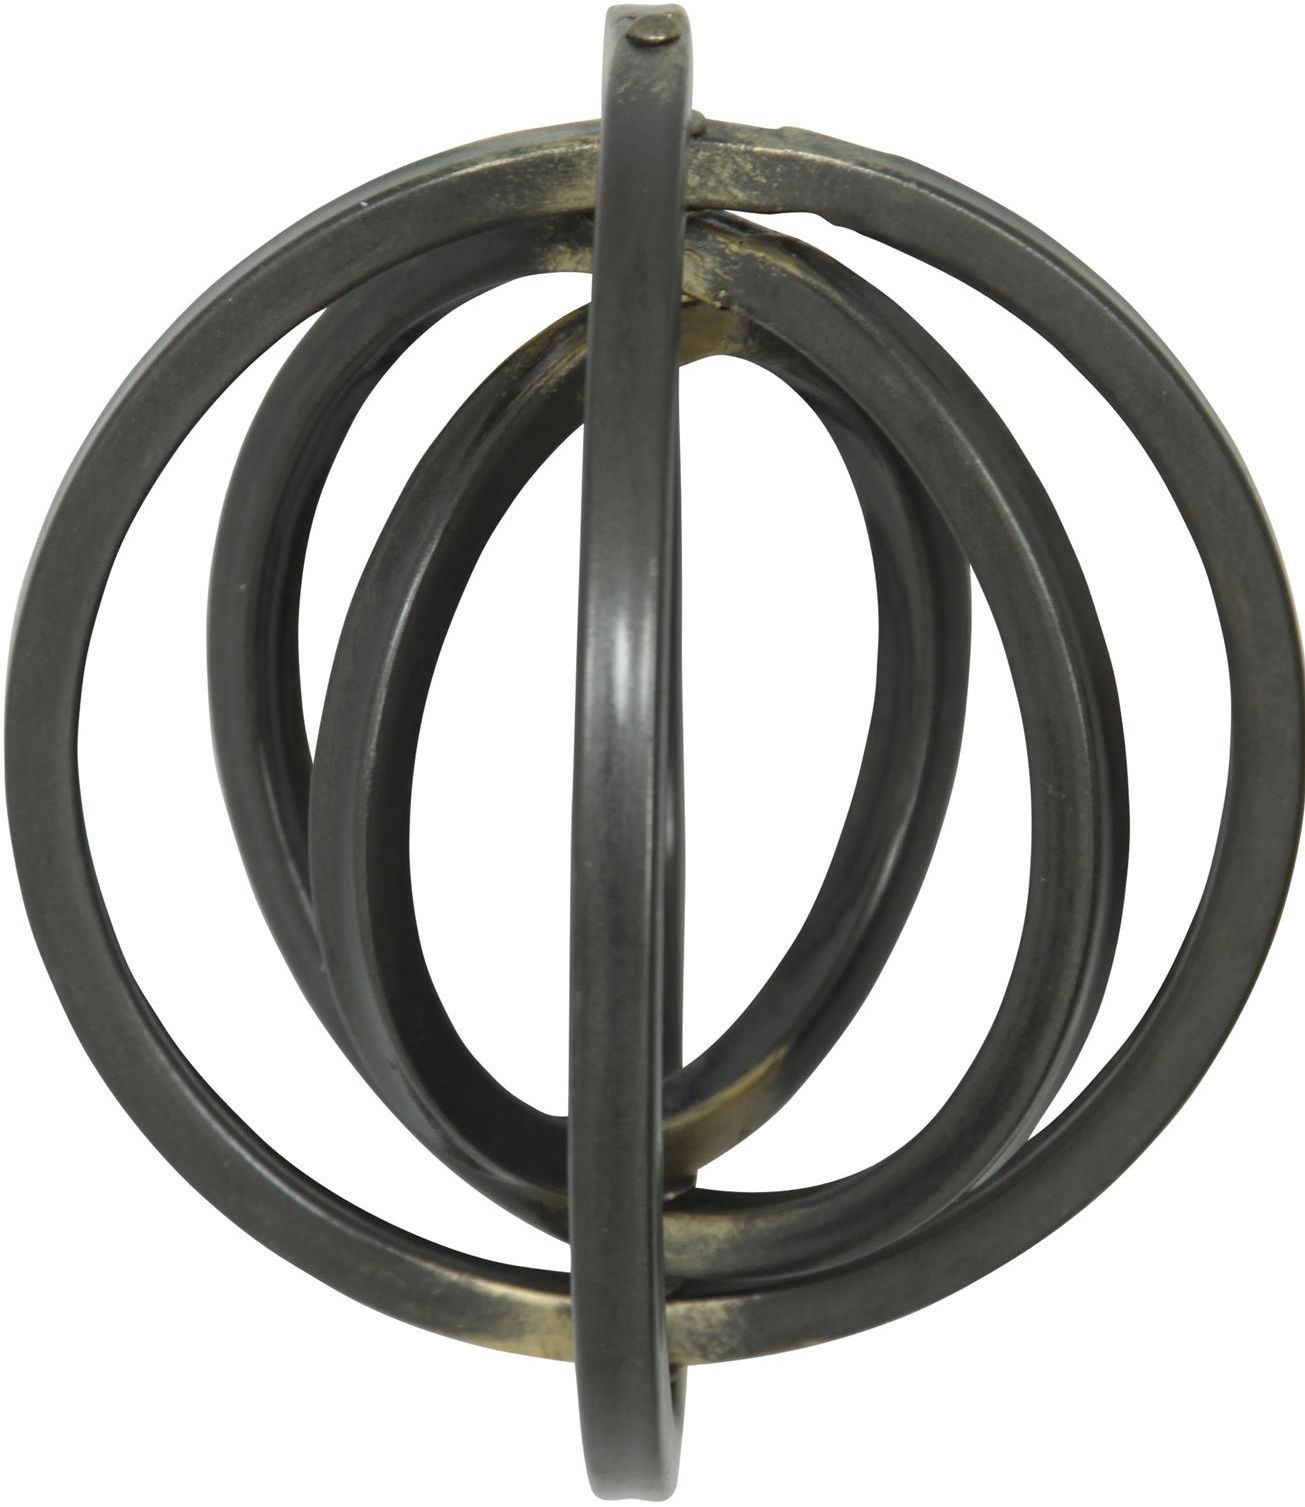 Harp & Finial® Anstel Metal Art